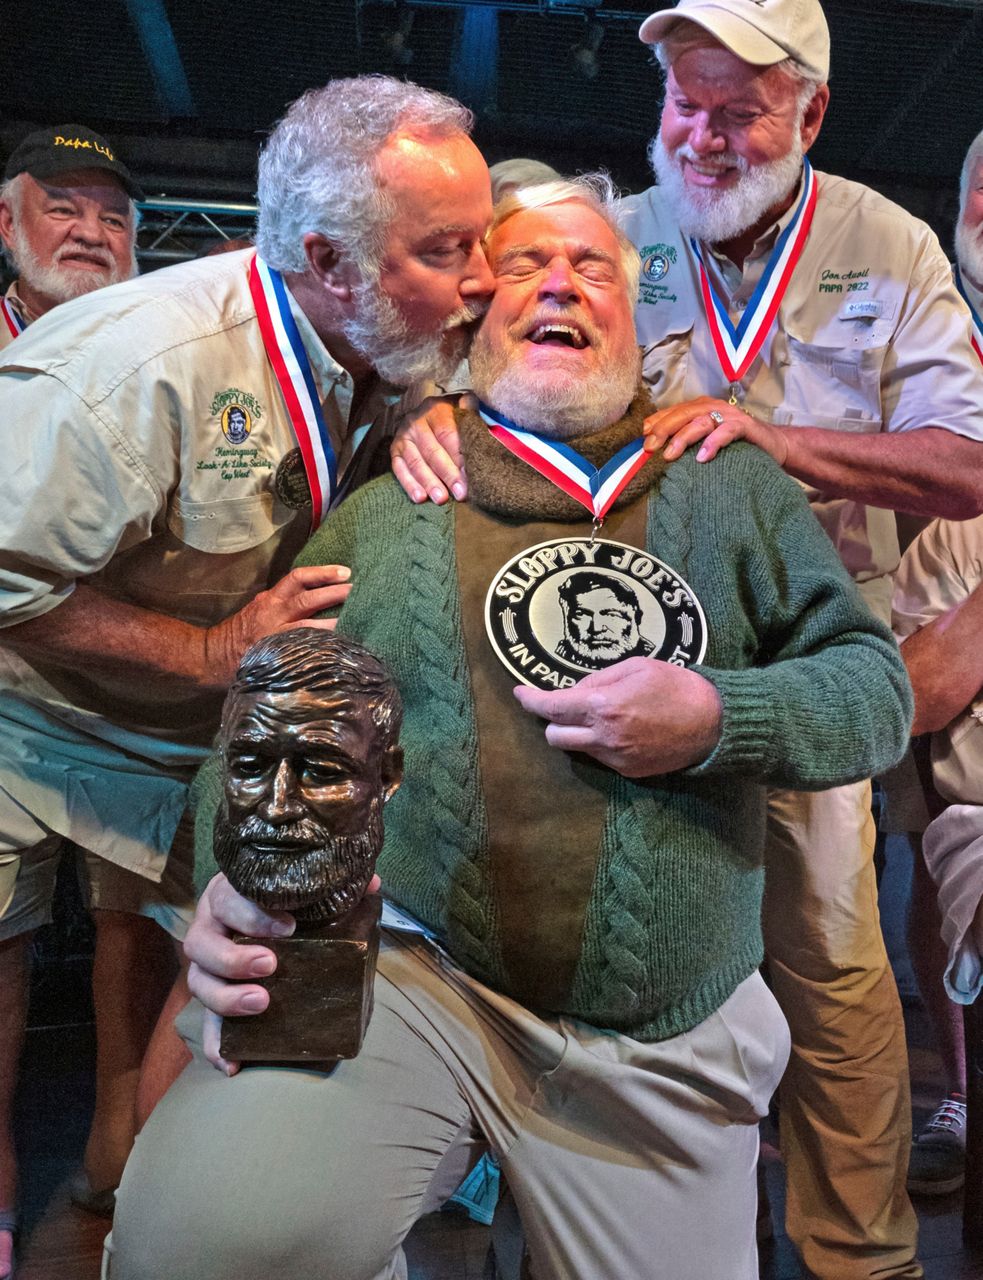 Wisconsin man wins Hemingway lookalike contest